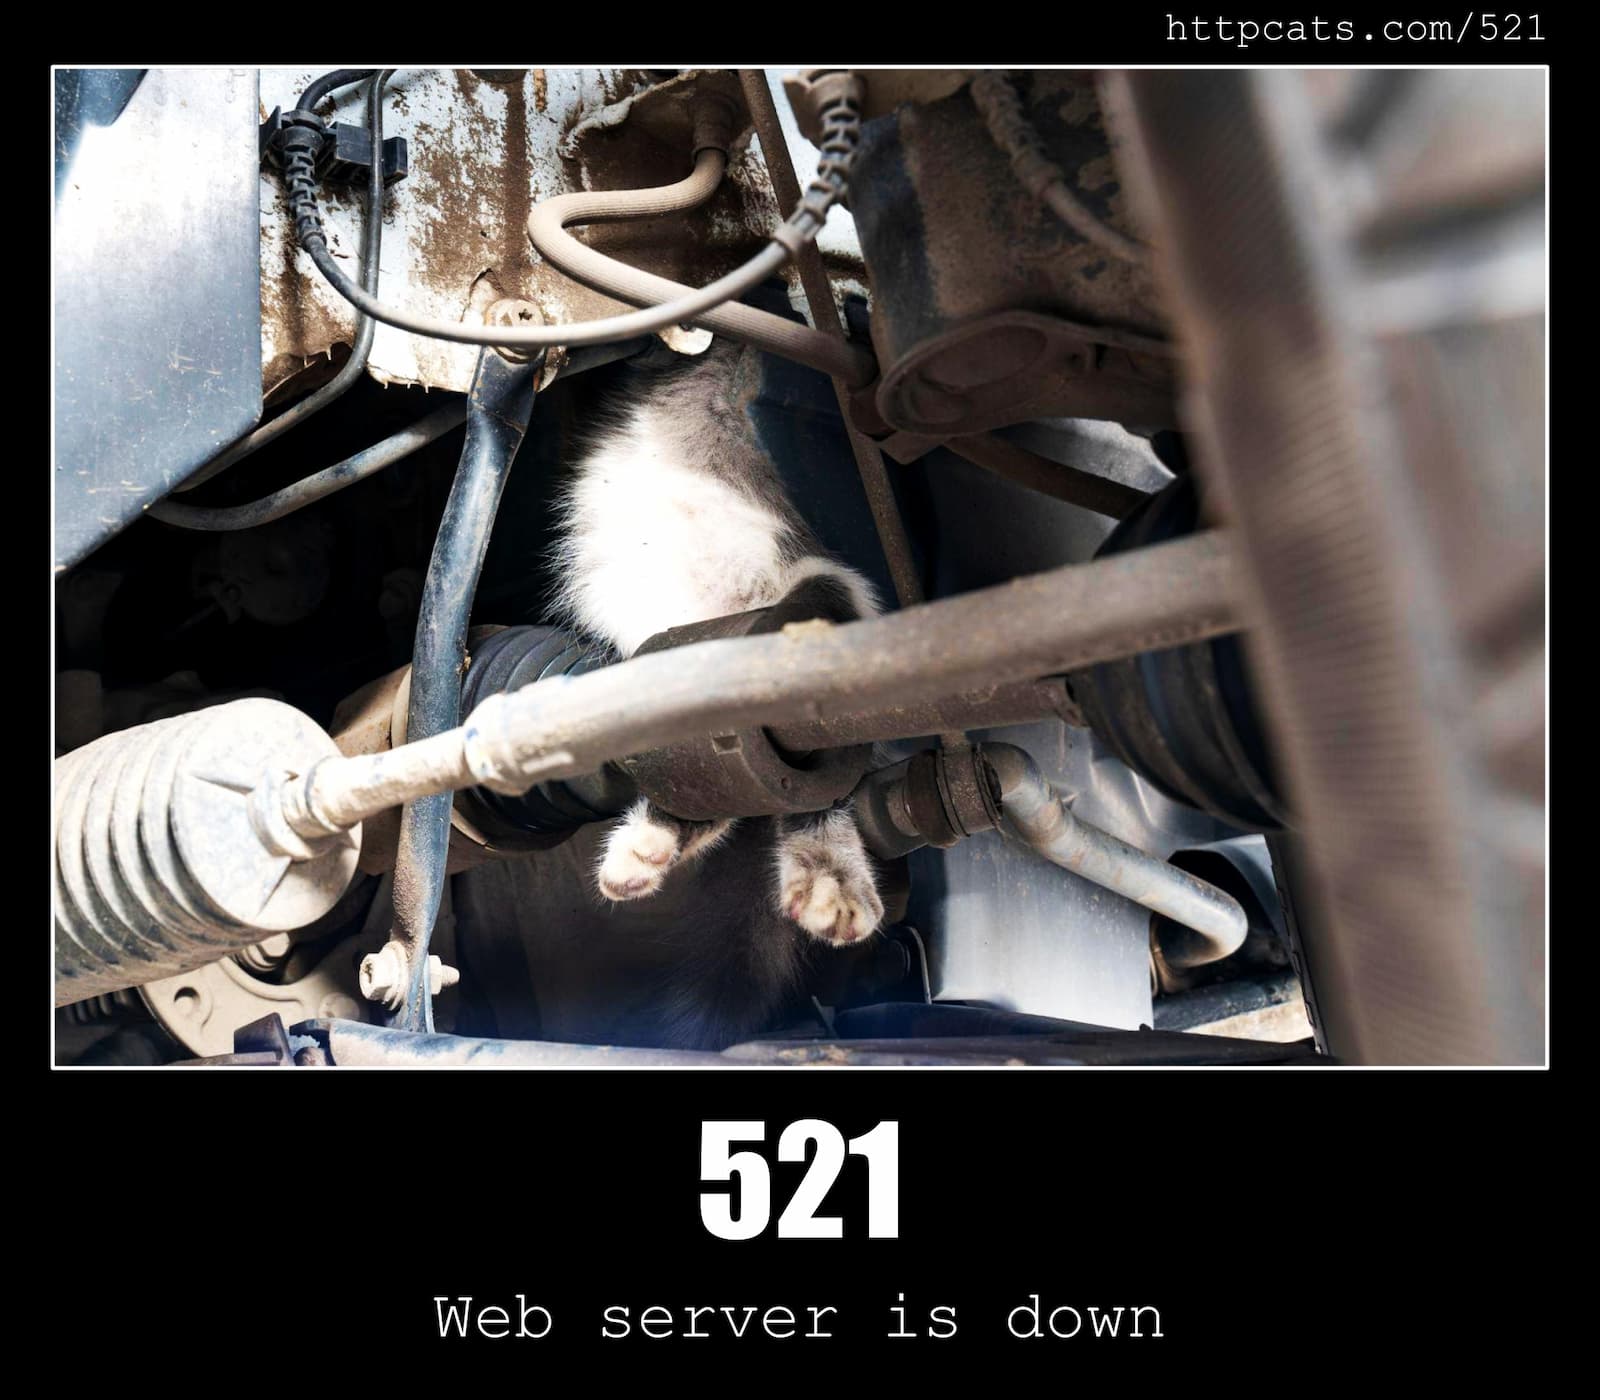 HTTP Status Code 521 Web server is down